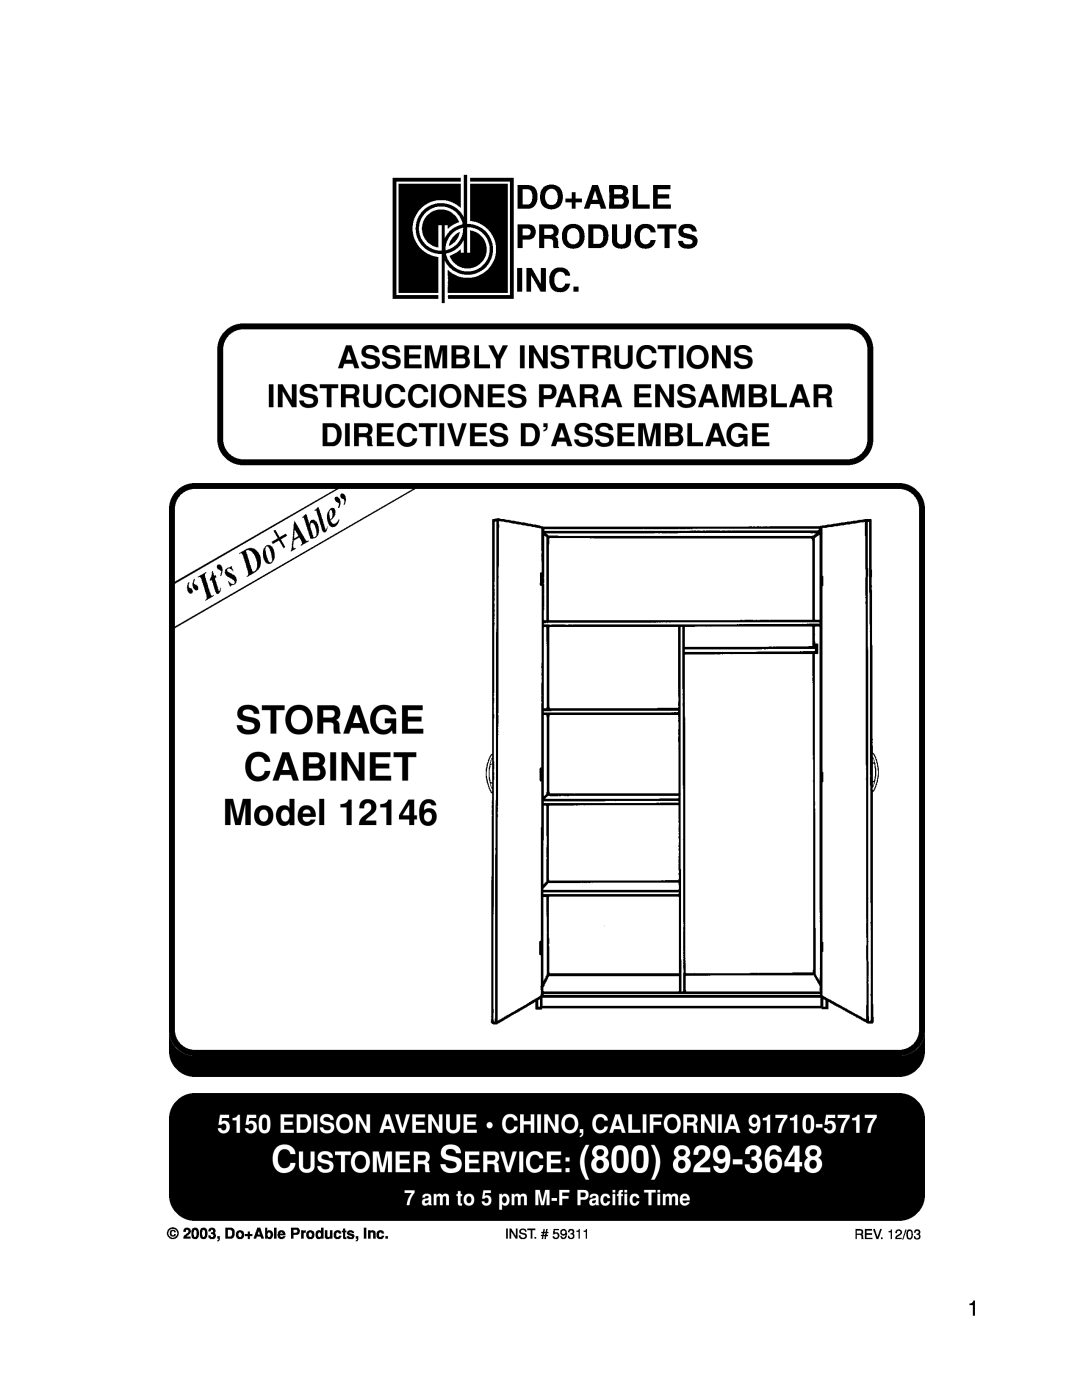 Closet Maid 12146 manual Model, Assembly Instructions, Storage Cabinet, Customer Service, Edison Avenue Chino, California 